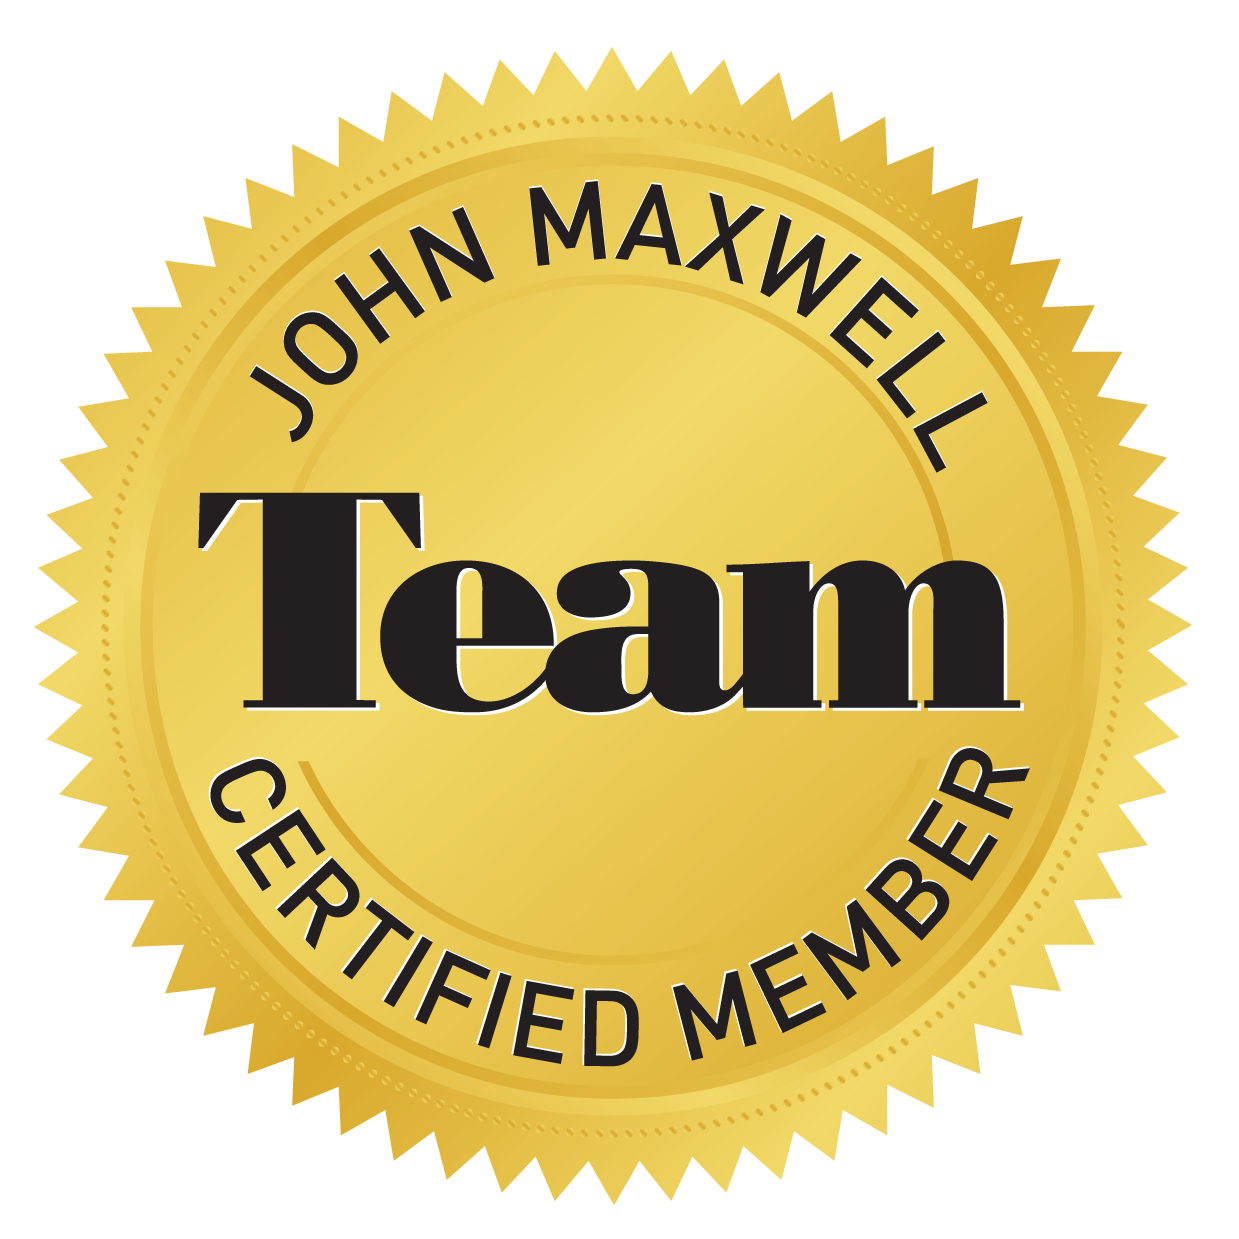 John Maxwell Certified Speaker, Trainer, Coach